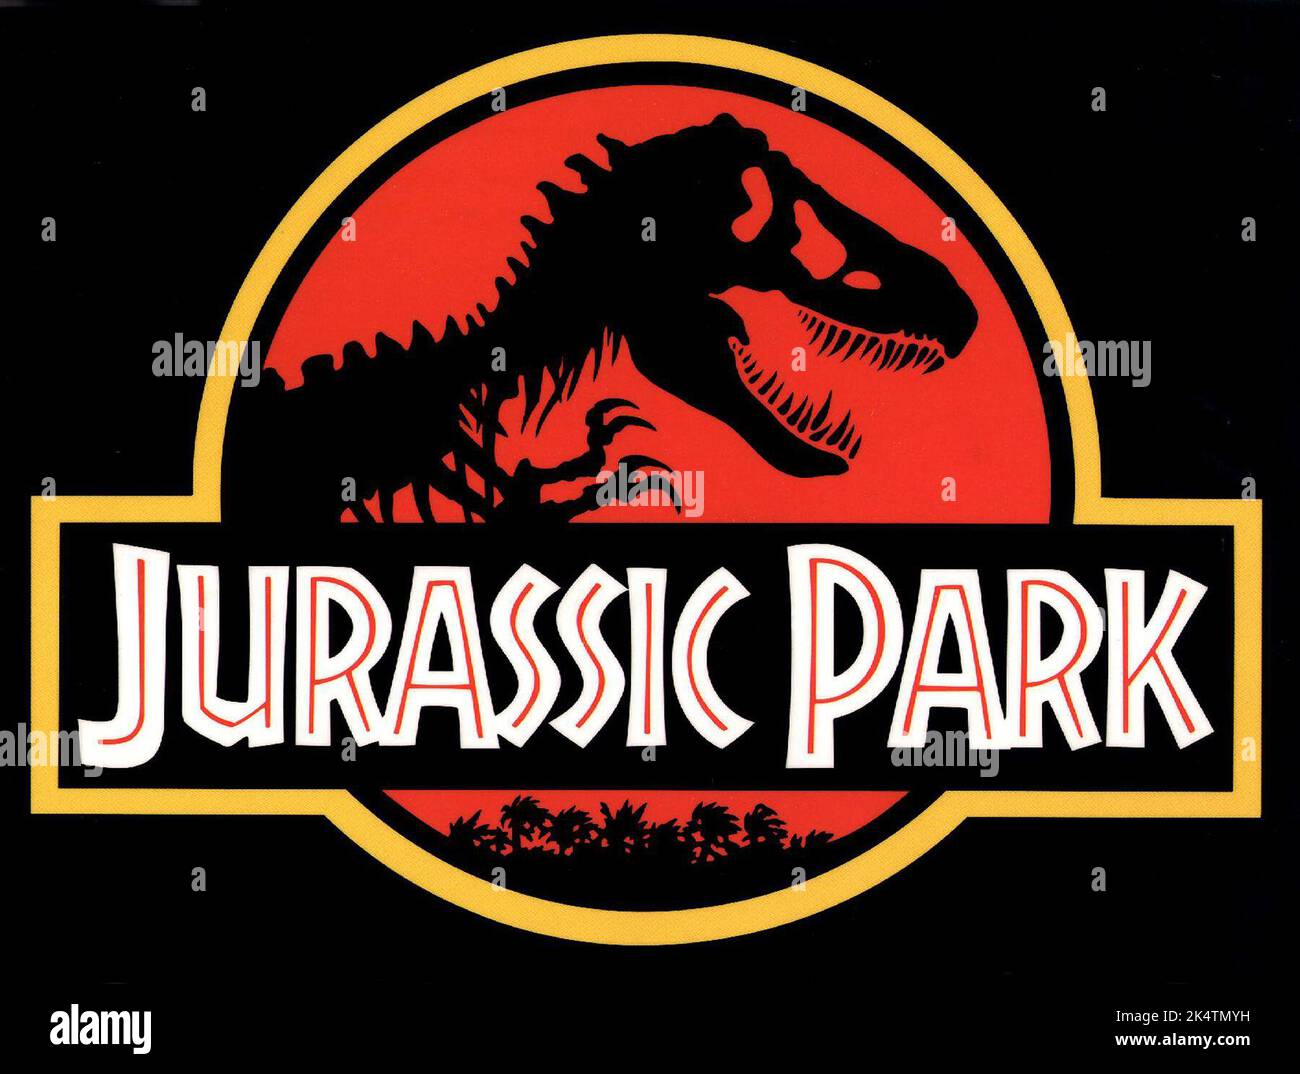 Jurassic Park 1993.  Jurassic Park Movie Poster Stock Photo